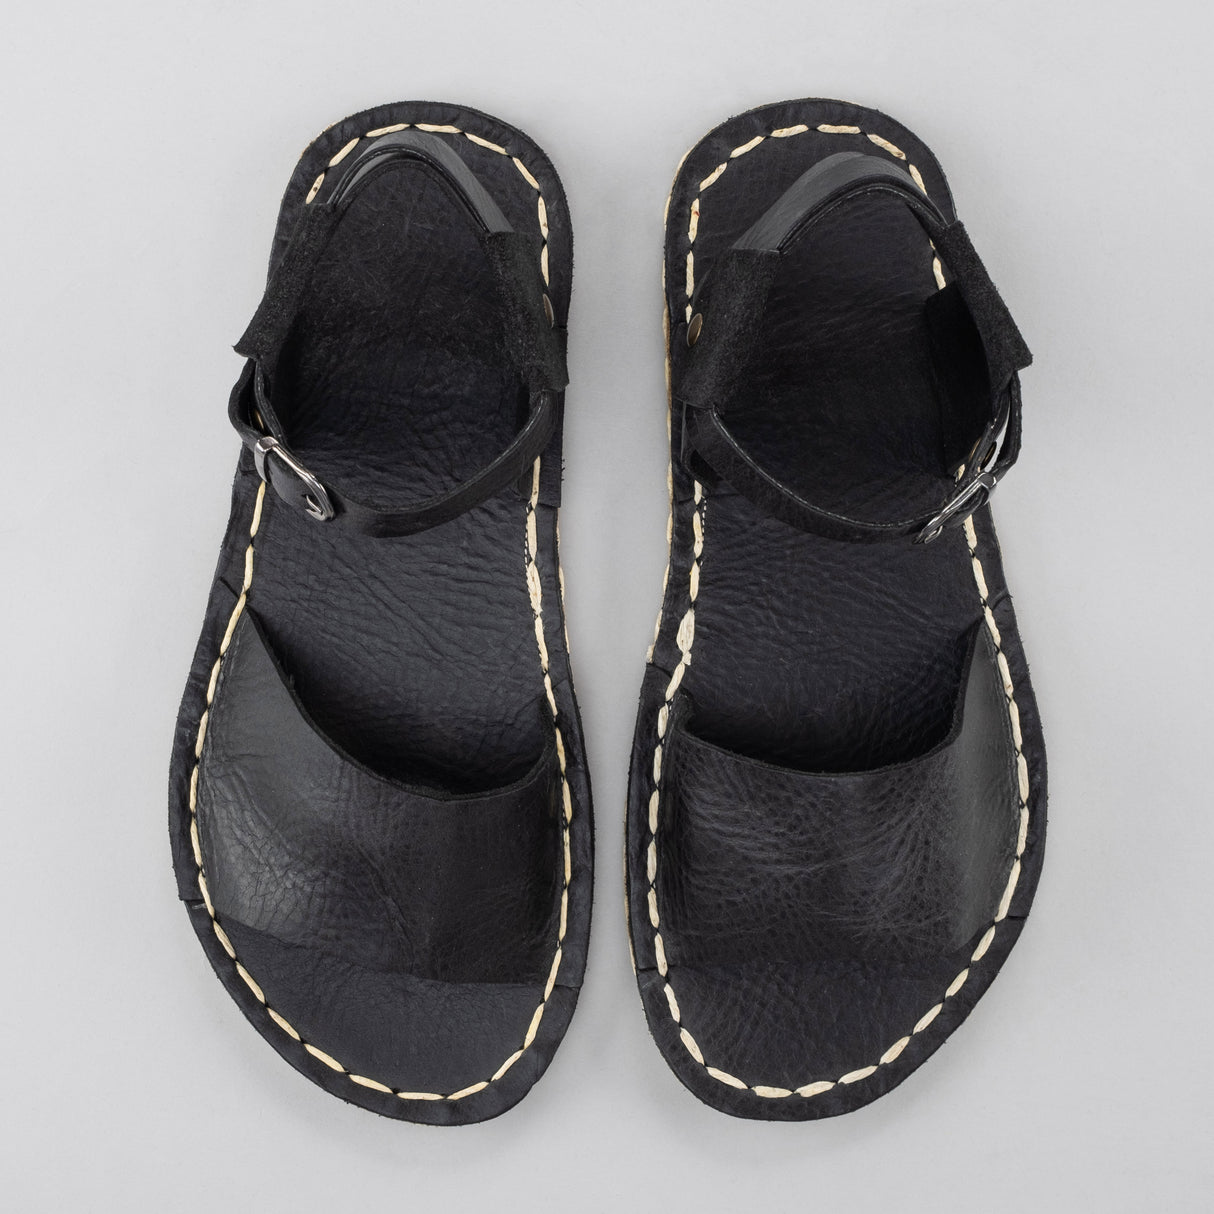 Siyah Burnu Açık Barefoot Sandalet